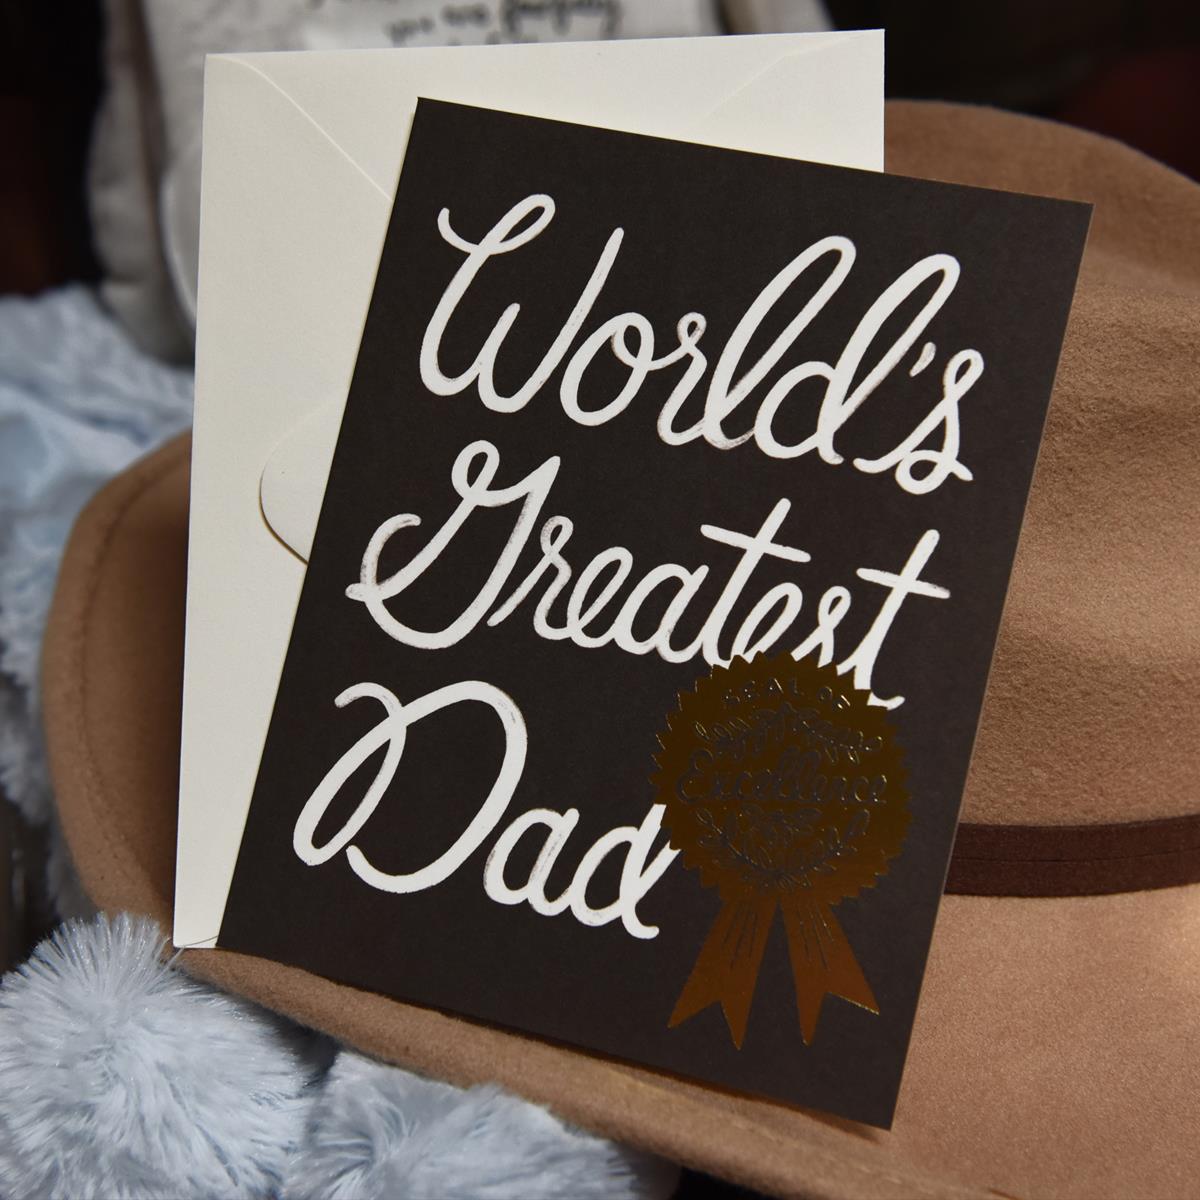 World's Greatest Dad Card